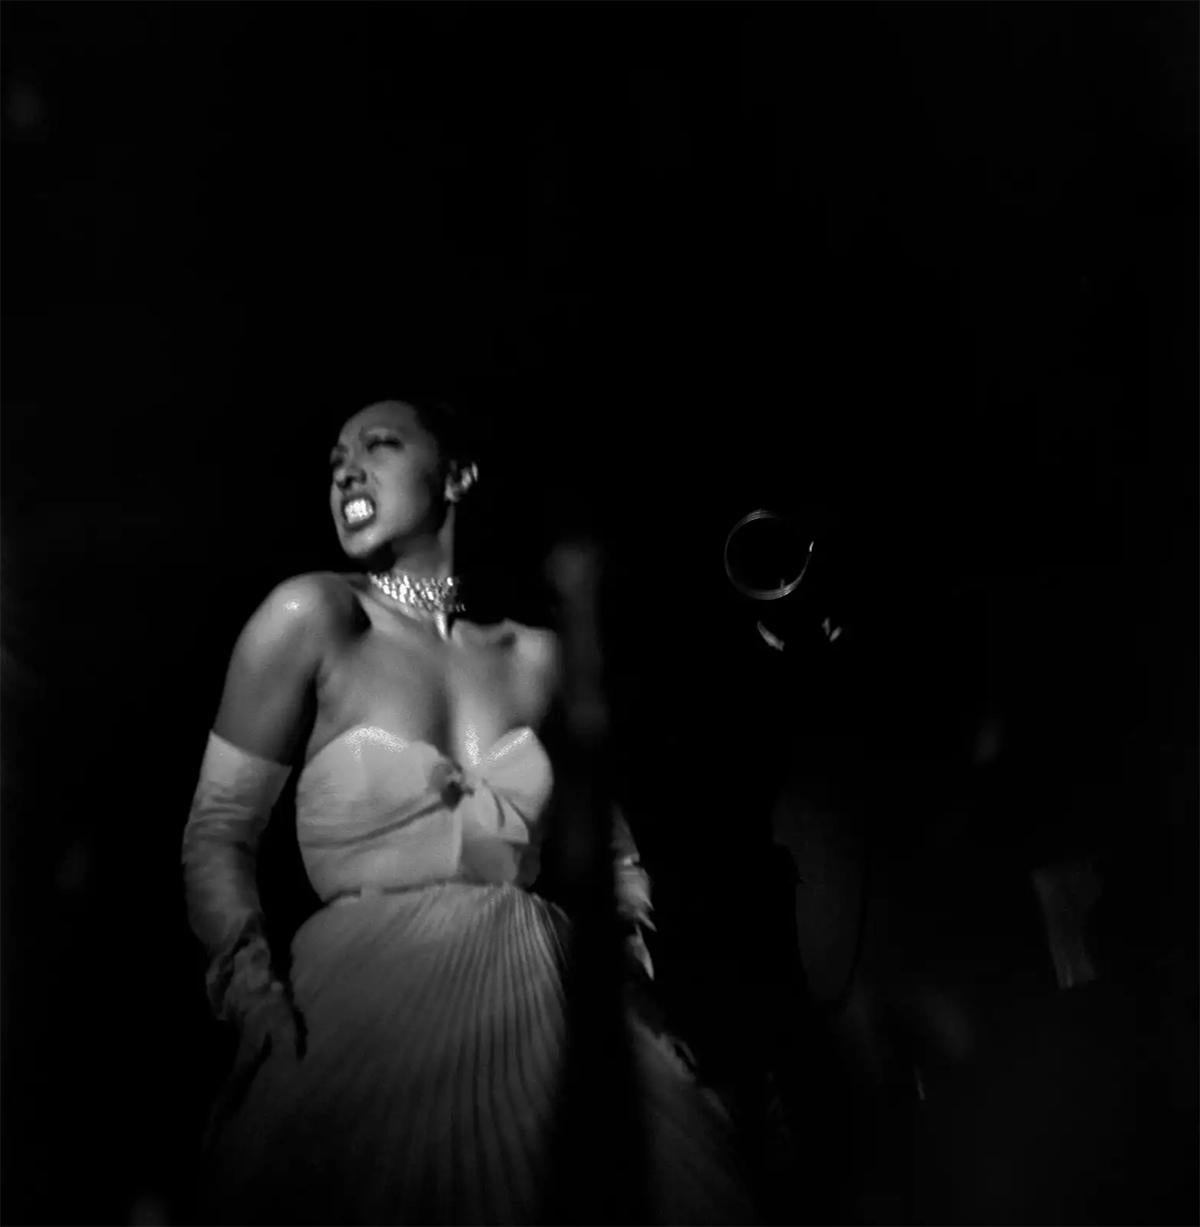 Josephine Baker, Harlem, New York, USA - Photograph by Eve Arnold